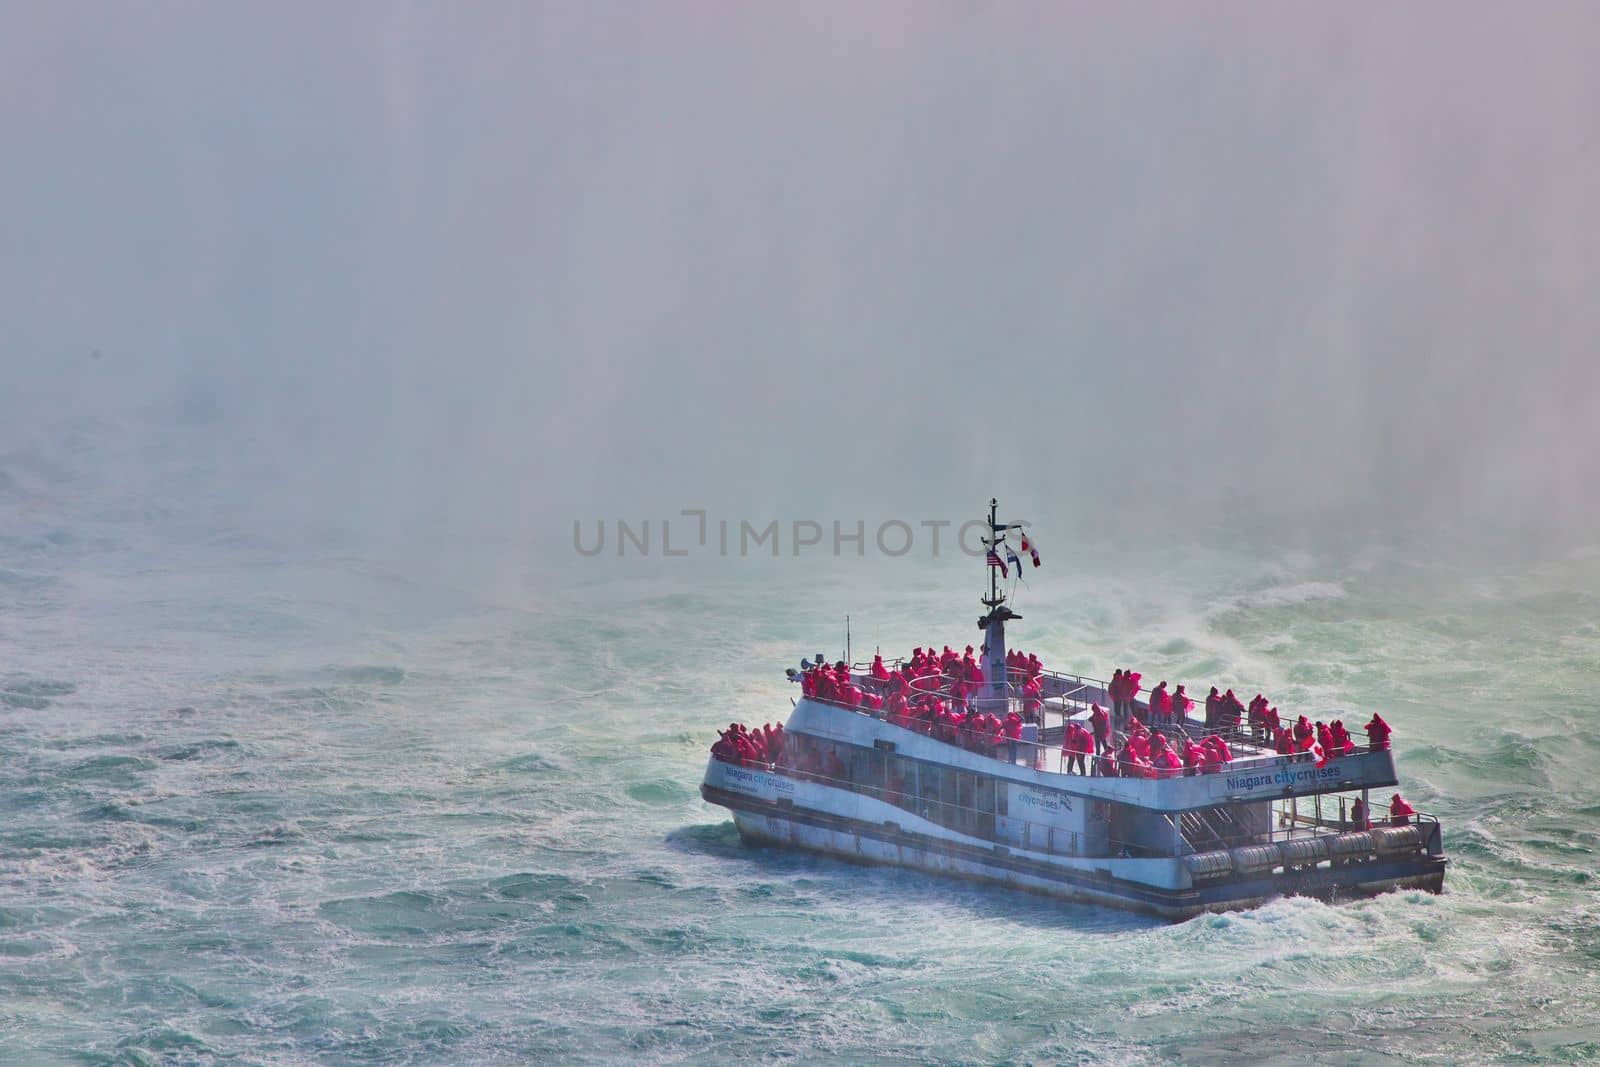 Tourist ship sailing into heavy mist at Niagara Falls by njproductions